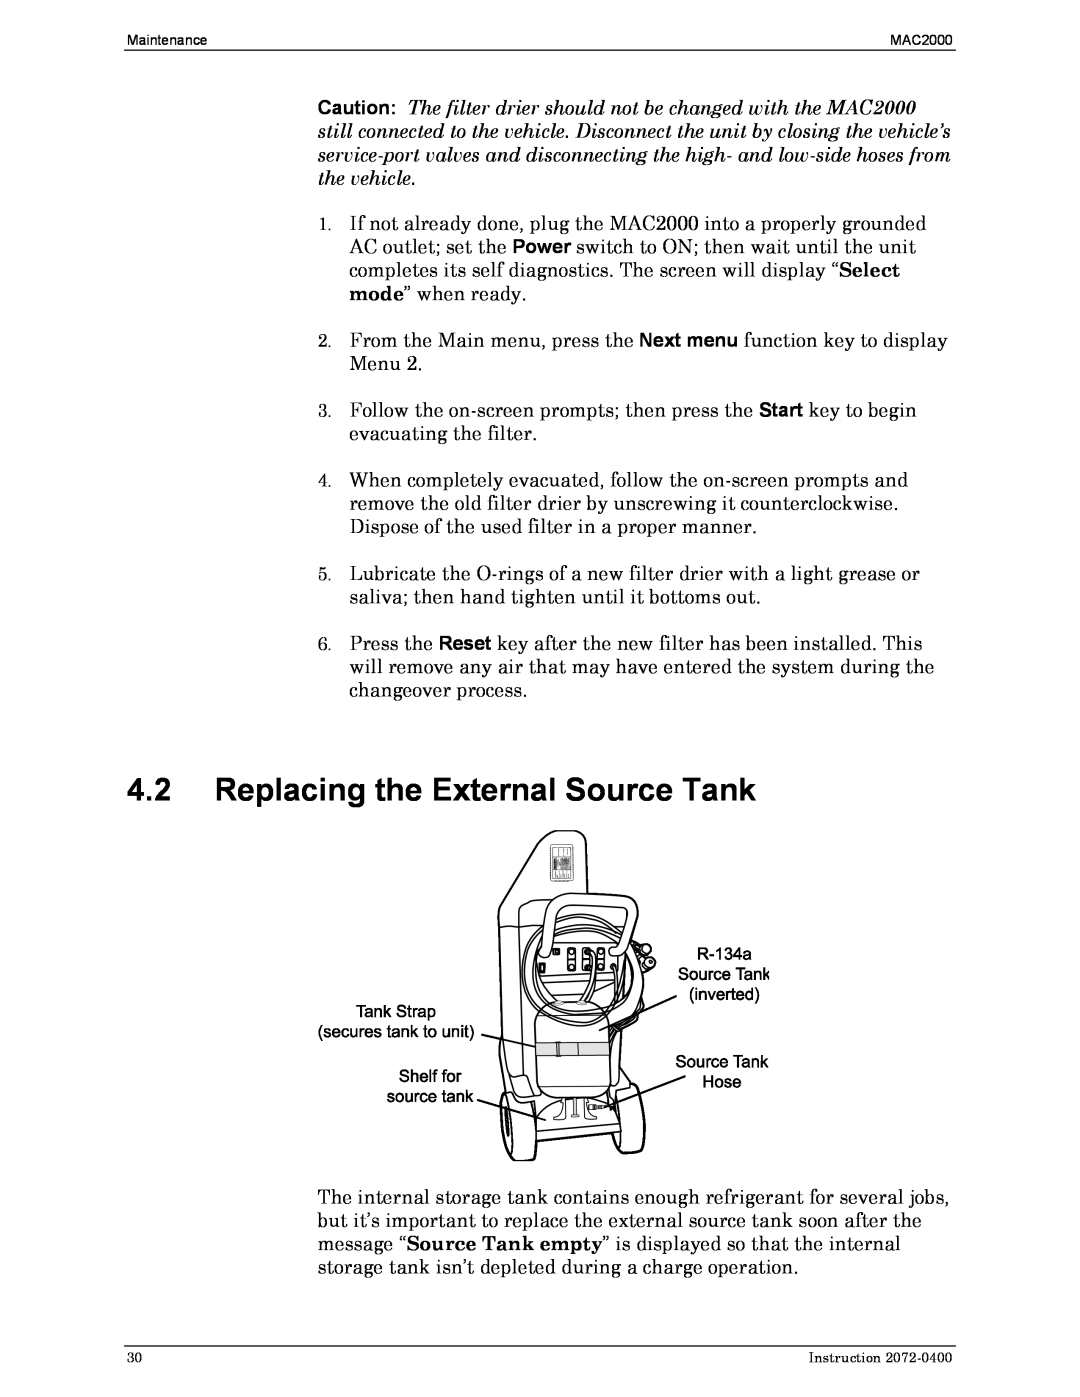 Bacharach 2072-0400 manual 4.2Replacing the External Source Tank 